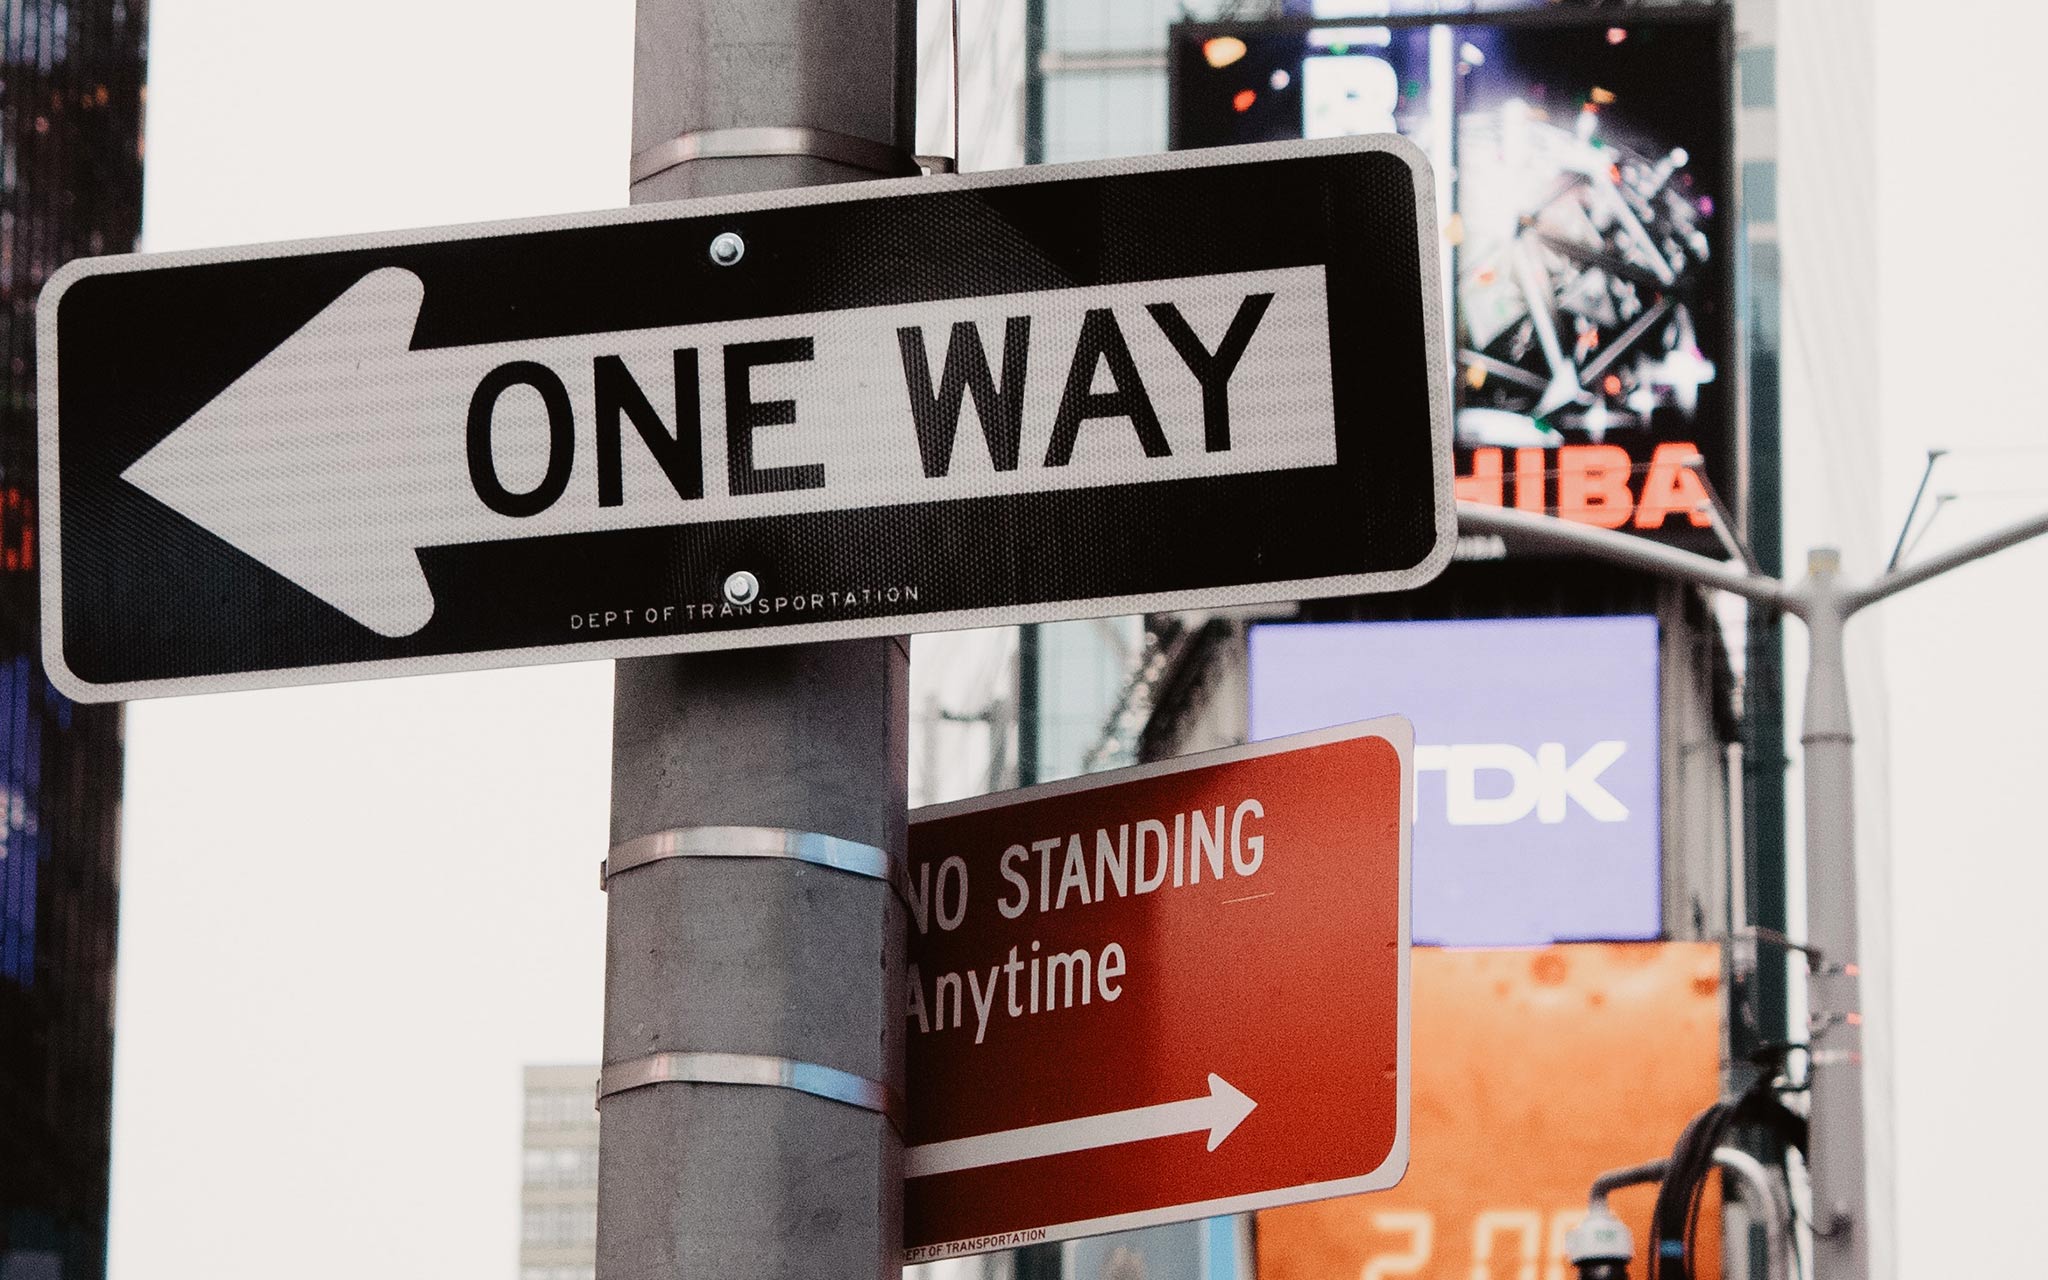 One way